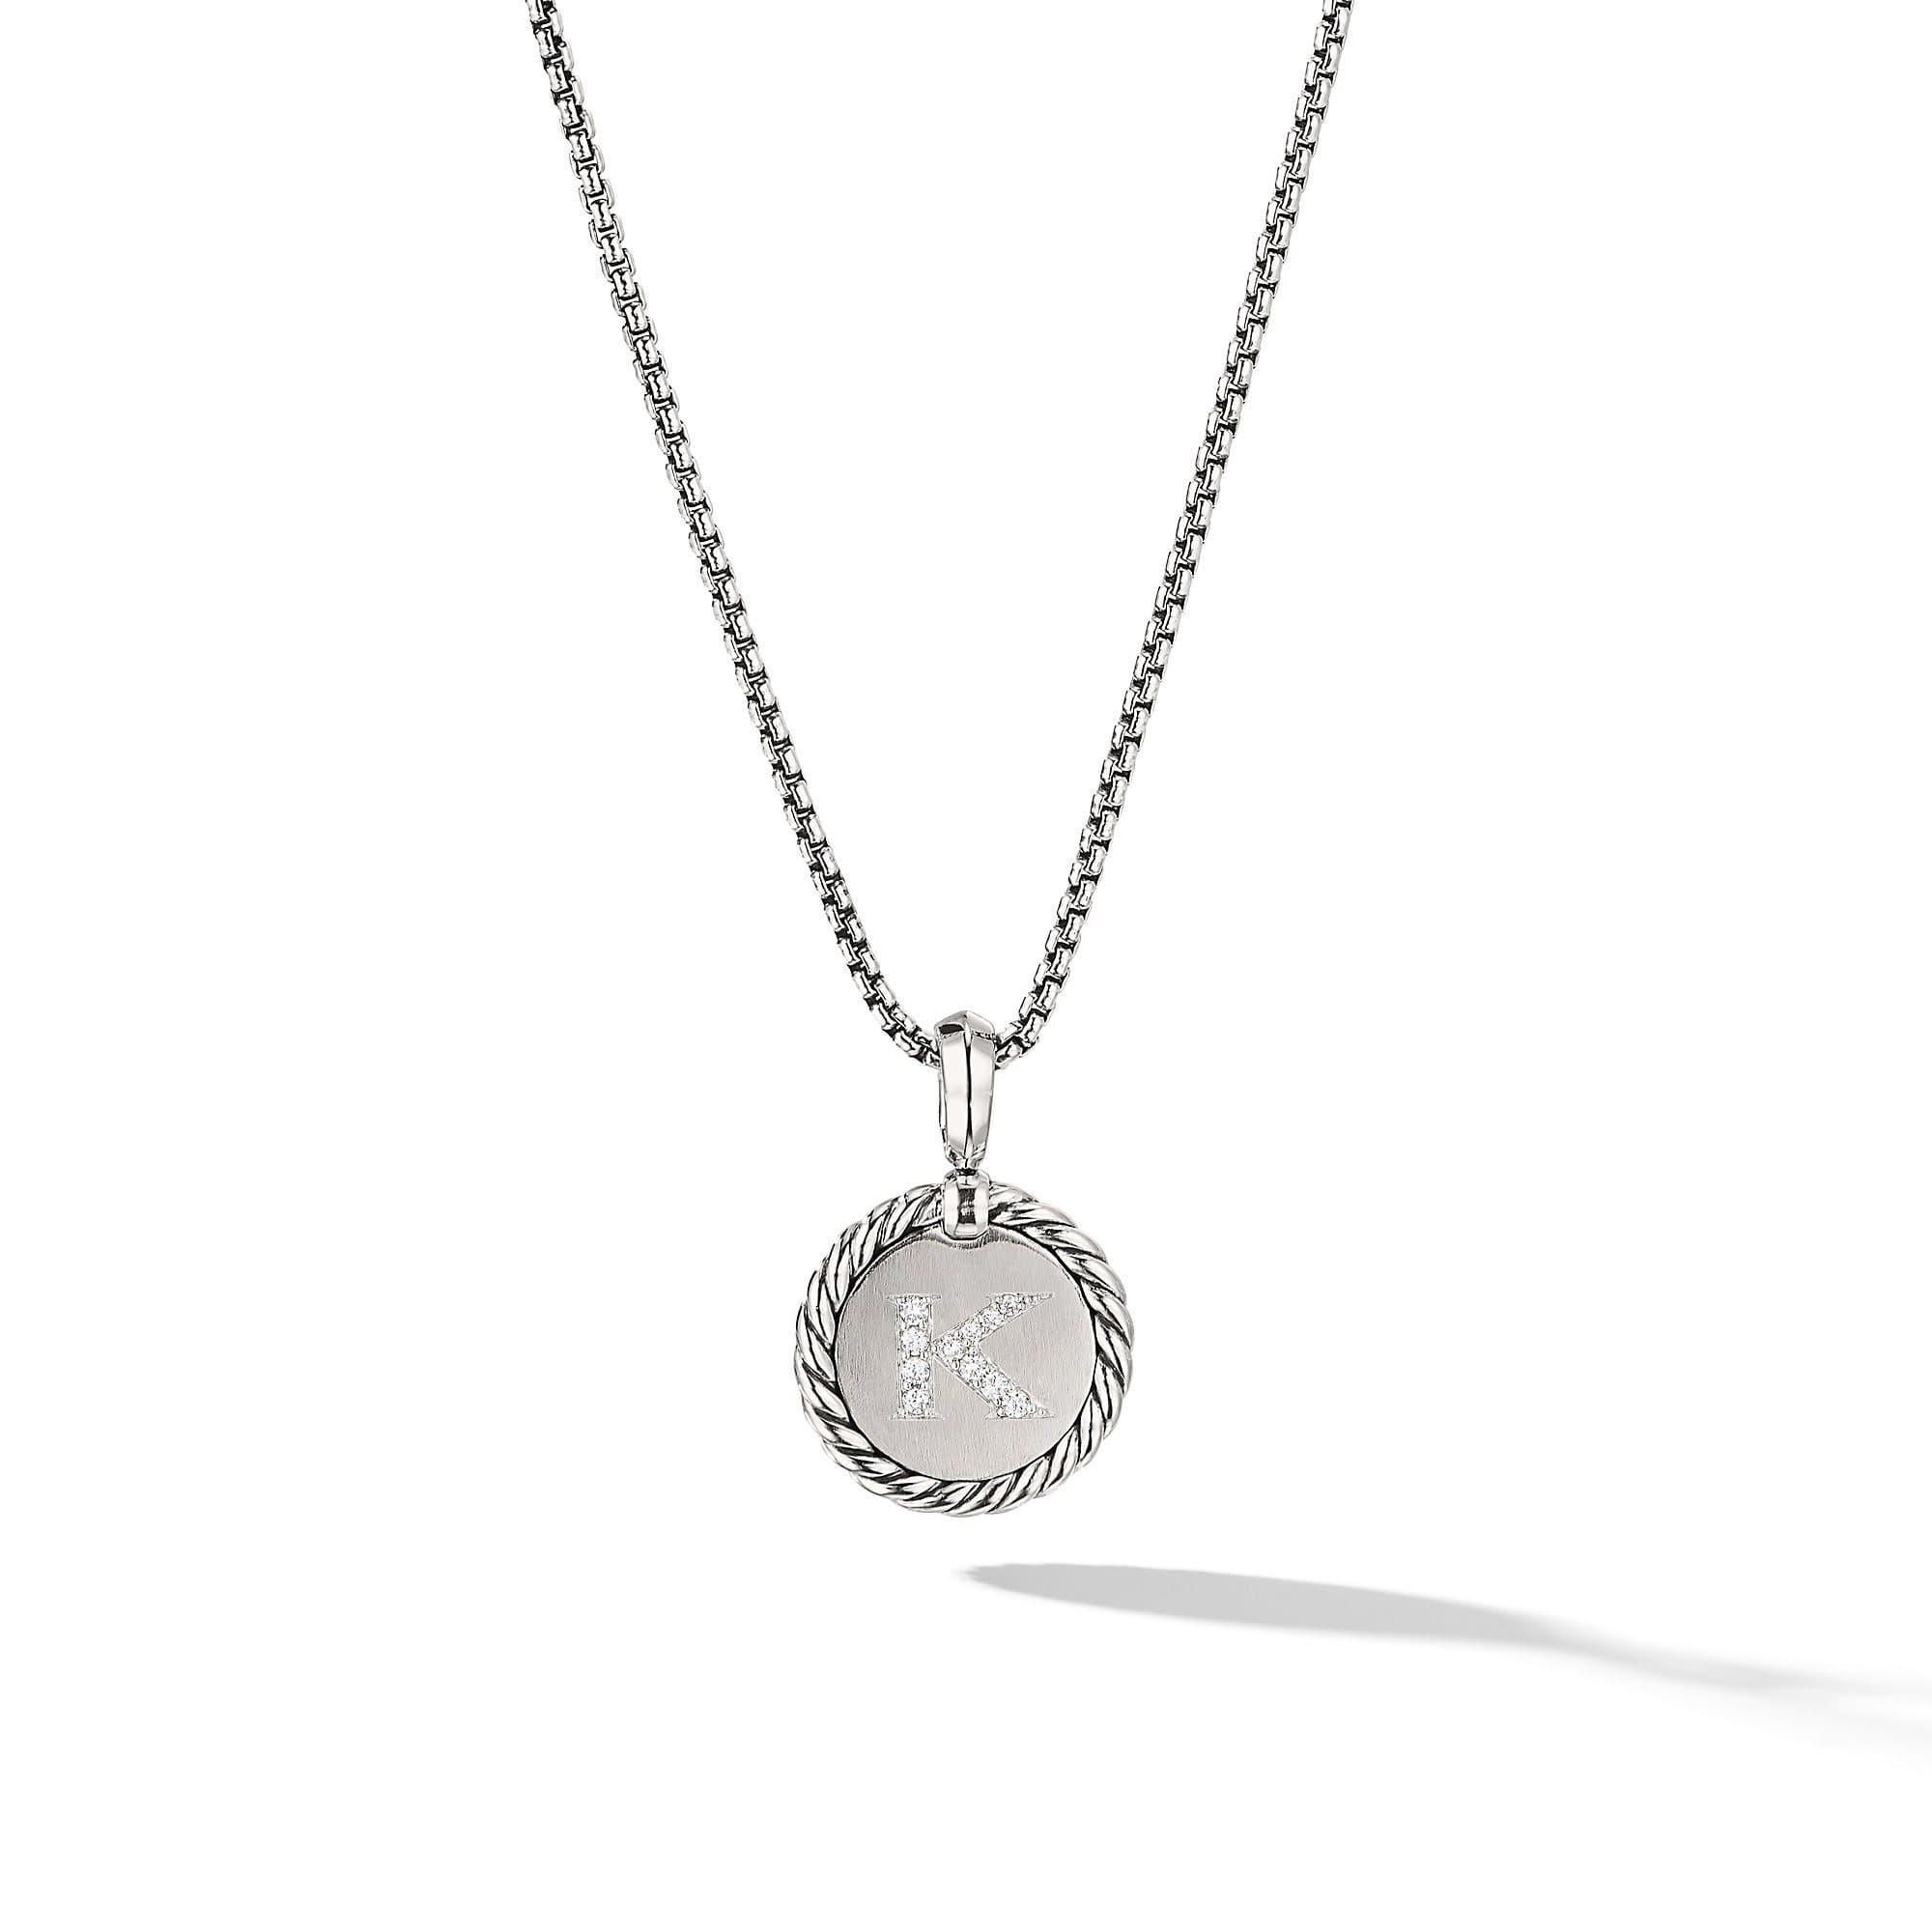 David Yurman Sterling Silver K initial Charm Necklace with Diamonds